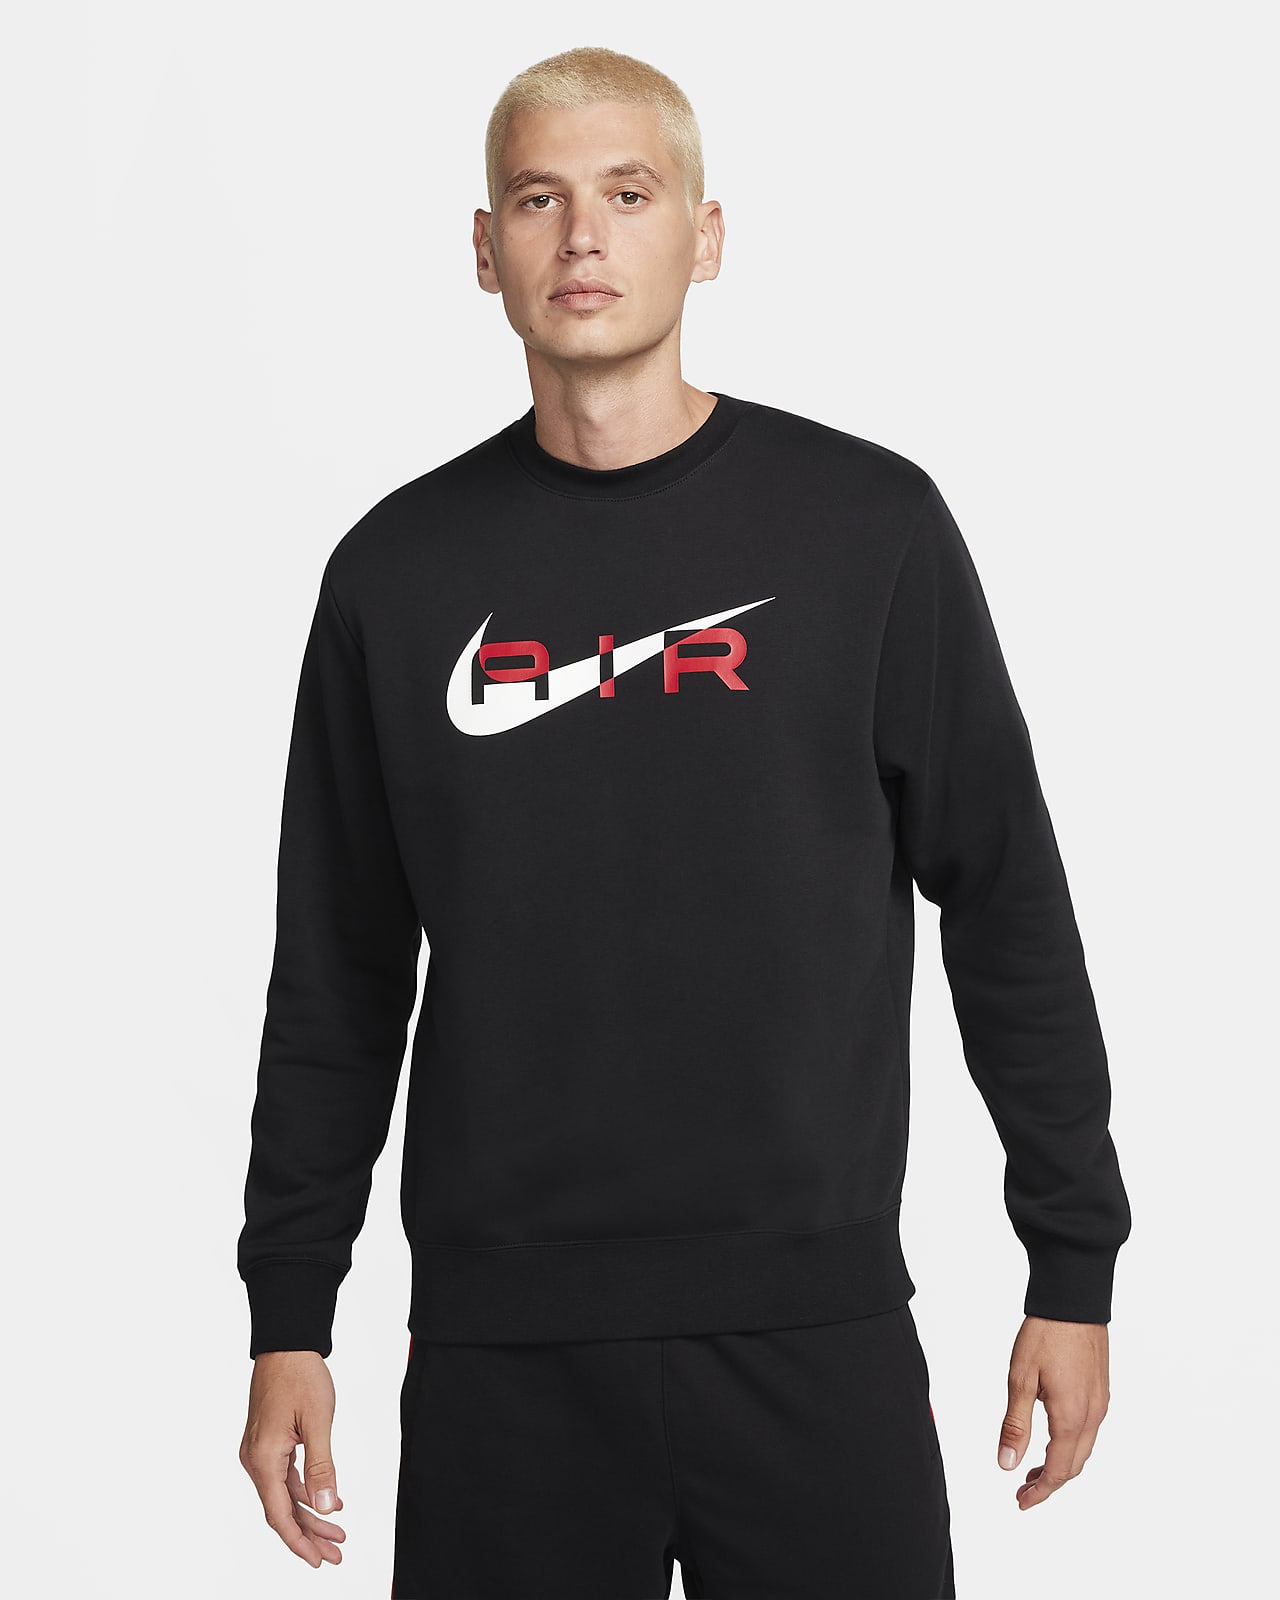 Nike Air Men's Fleece Crew-Neck Sweatshirt. Nike ZA